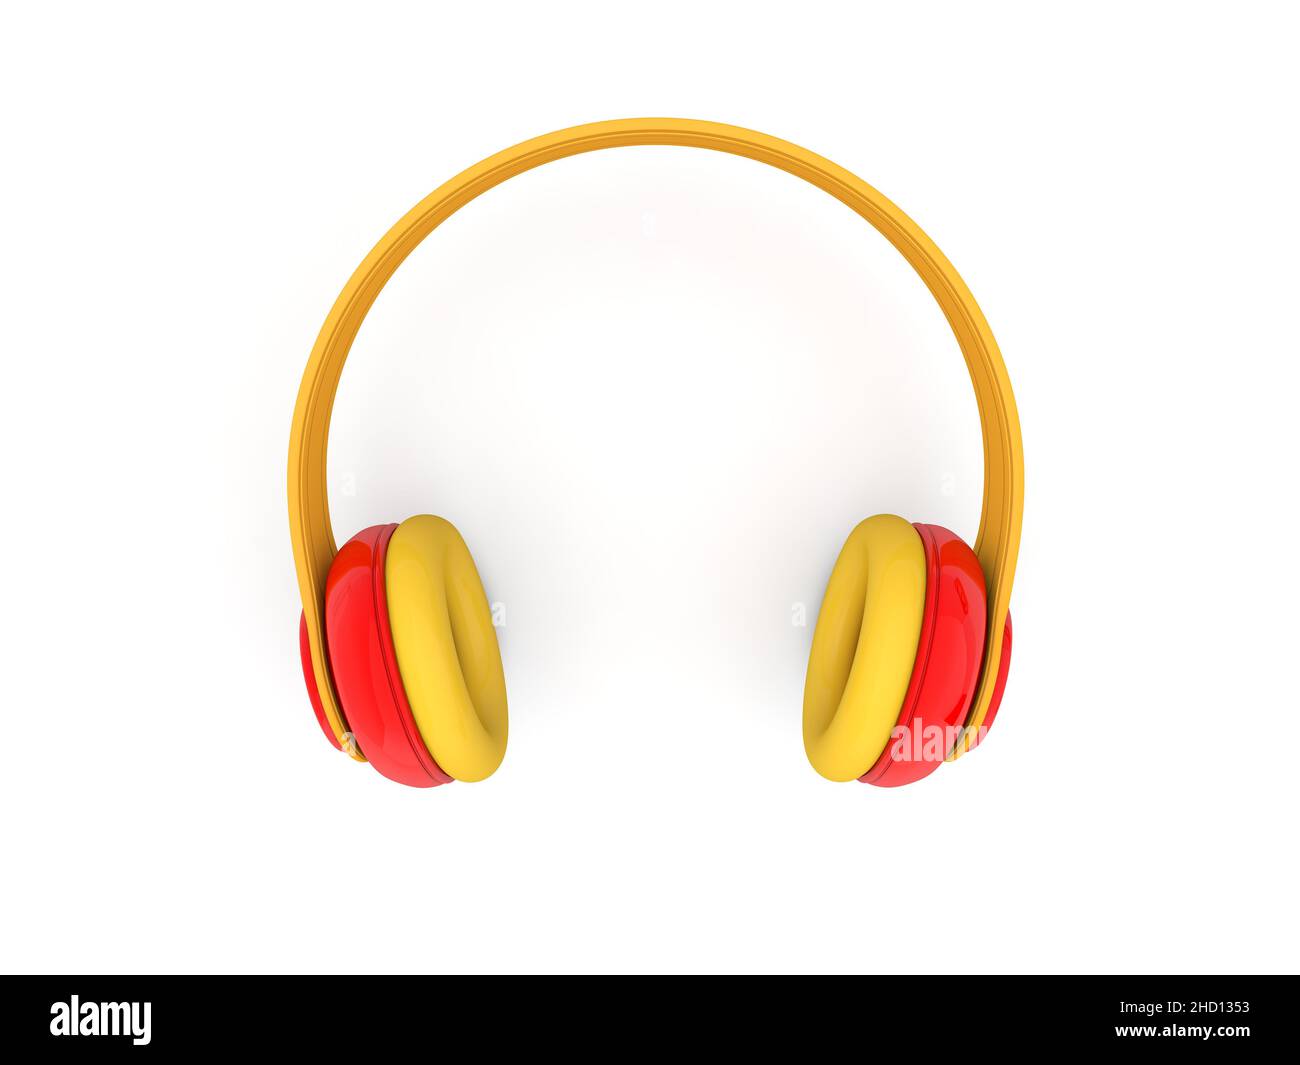 Wireless headphones on a white background. 3d render illustration. Stock Photo